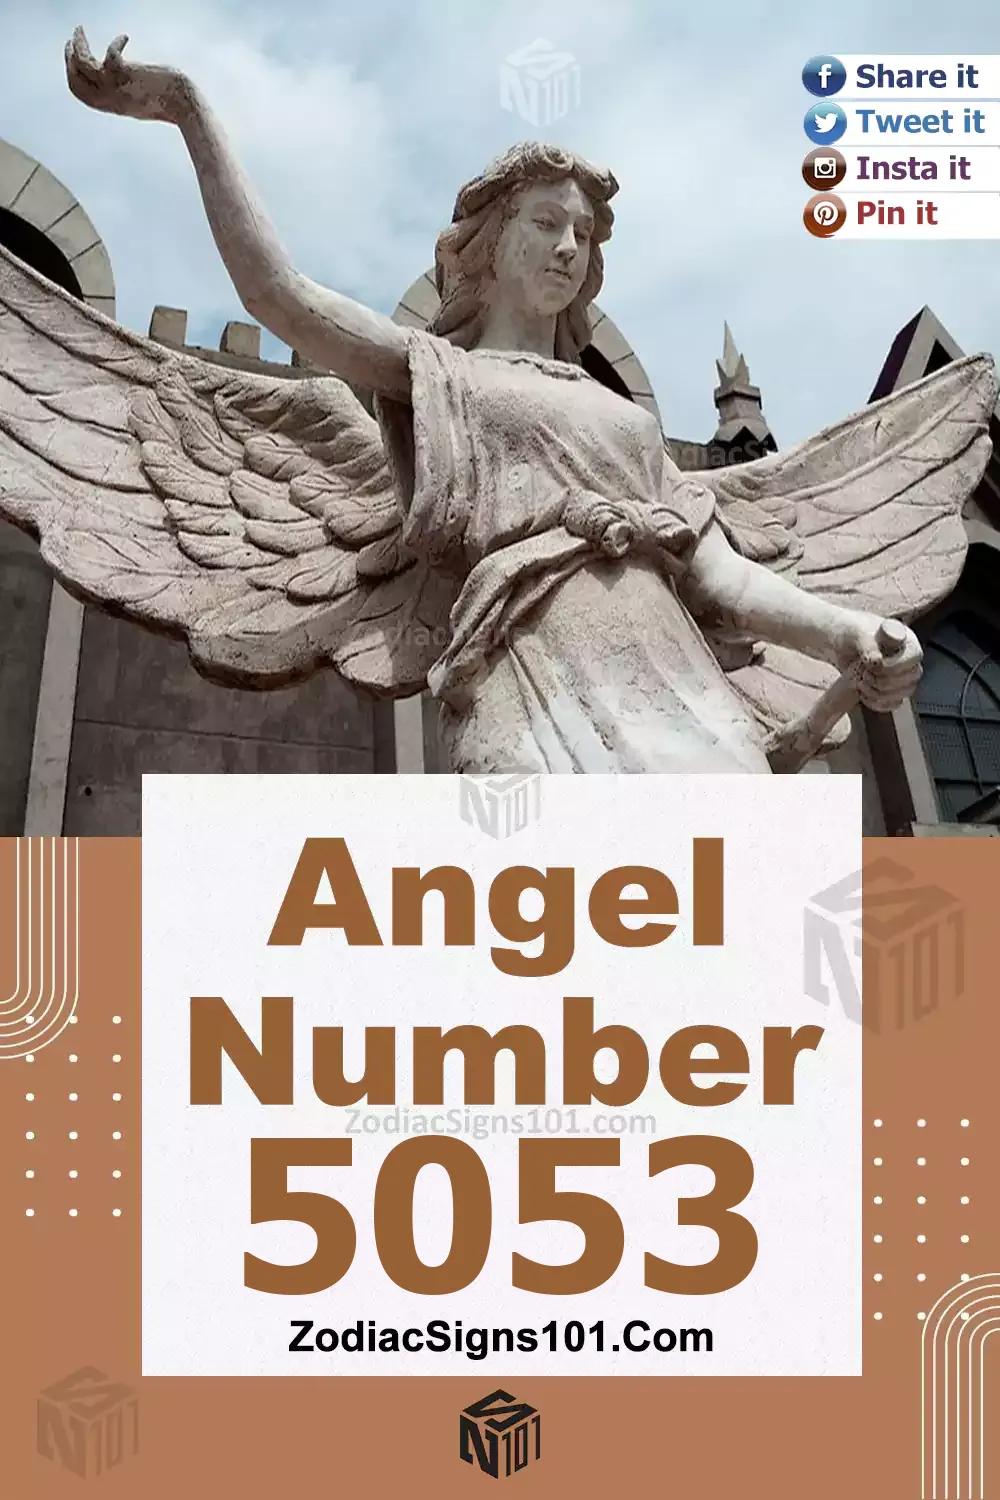 5053-Angel-Number-Meaning.jpg